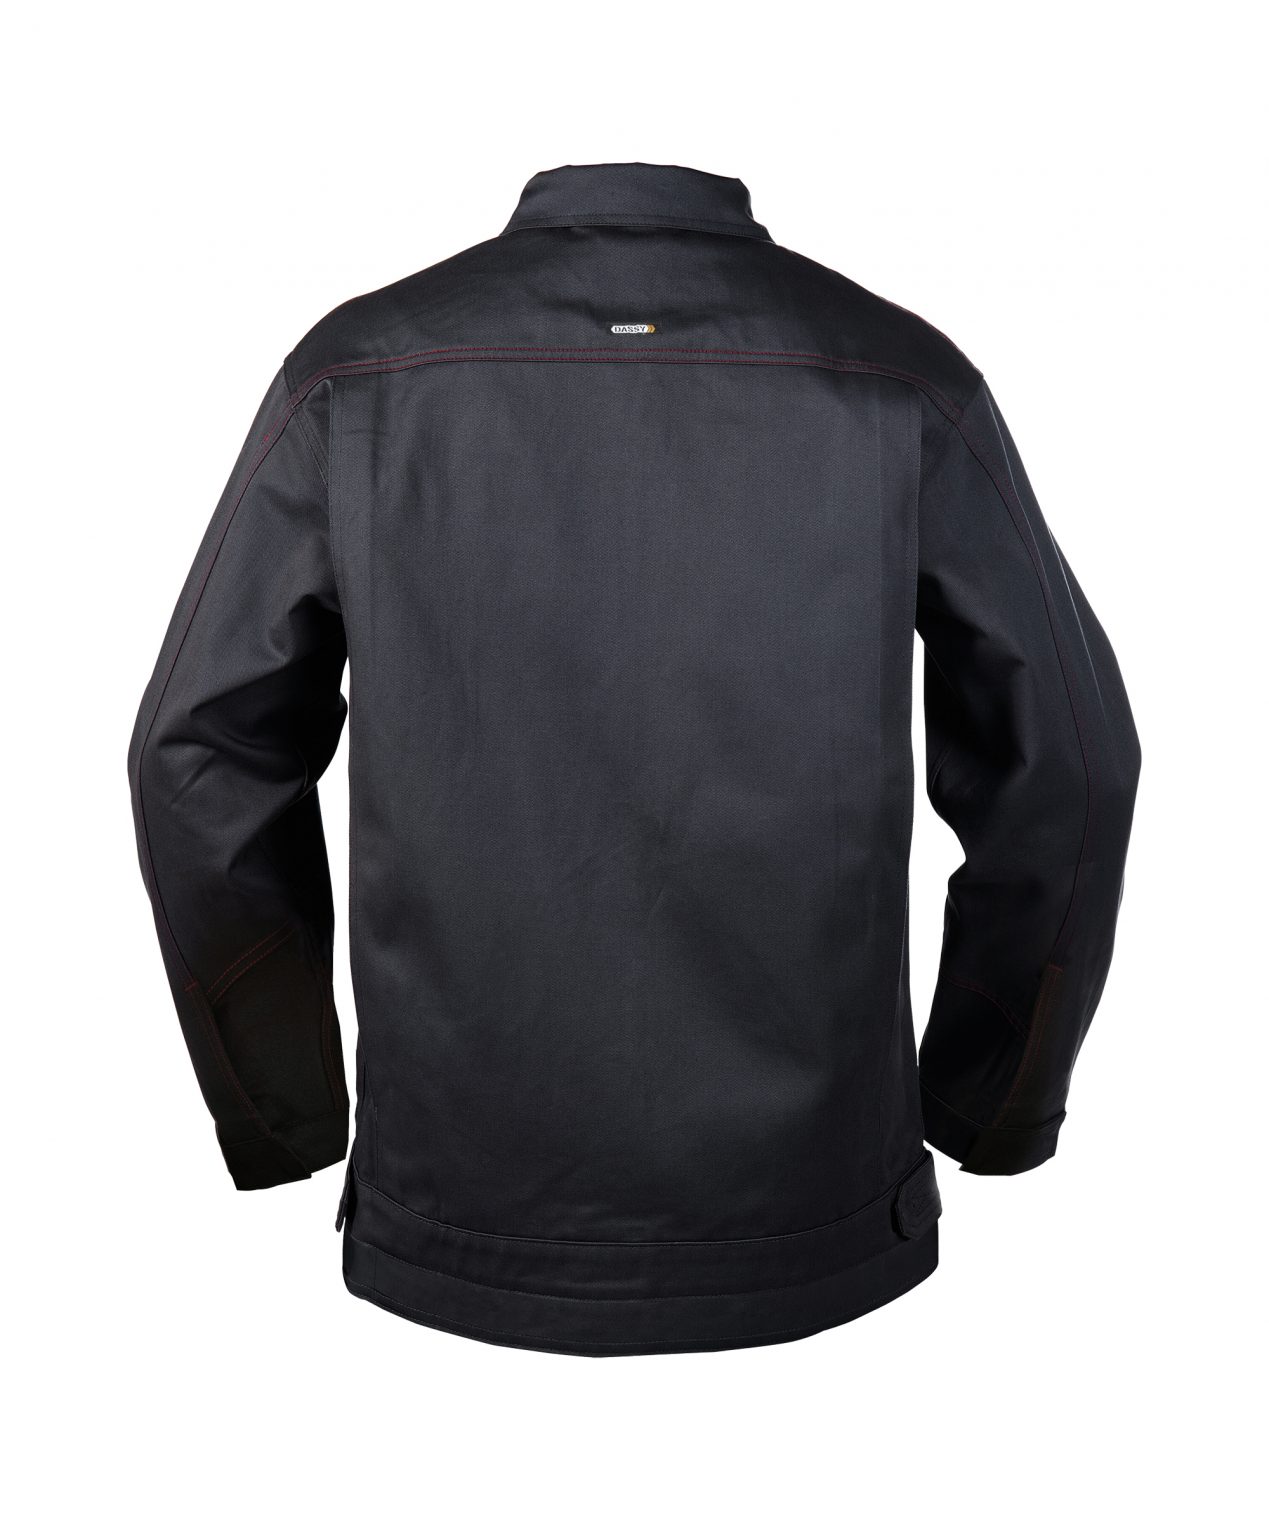 montana flame retardant work jacket black back